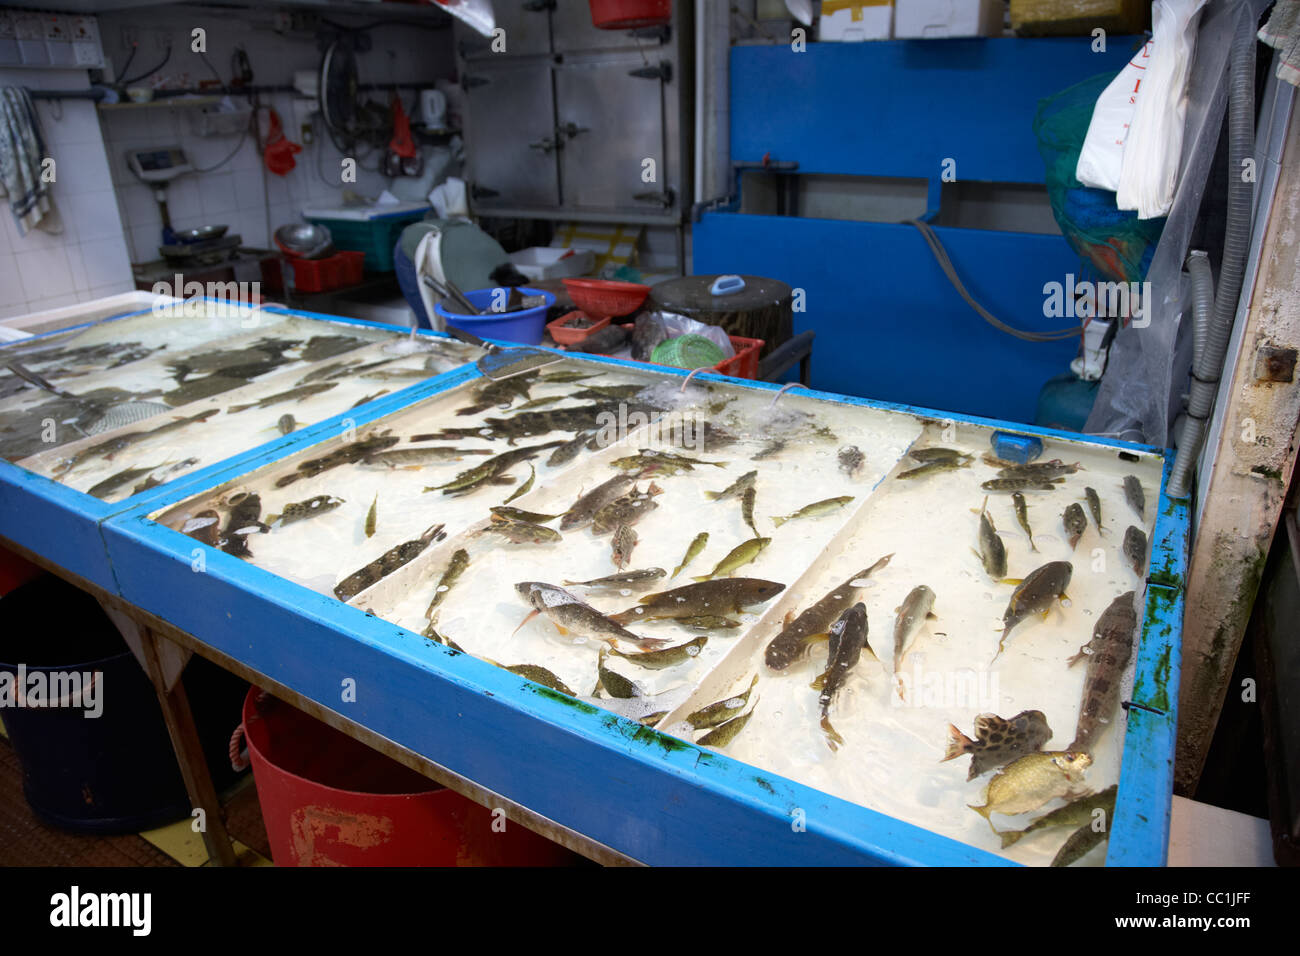 lebende Fische in Tabelle Oberseiten Tanks für Verkauf in Yau Ma Tei indoor Lebensmittel Markt Kowloon Hong Kong Sonderverwaltungsregion Hongkong China Asien Stockfoto